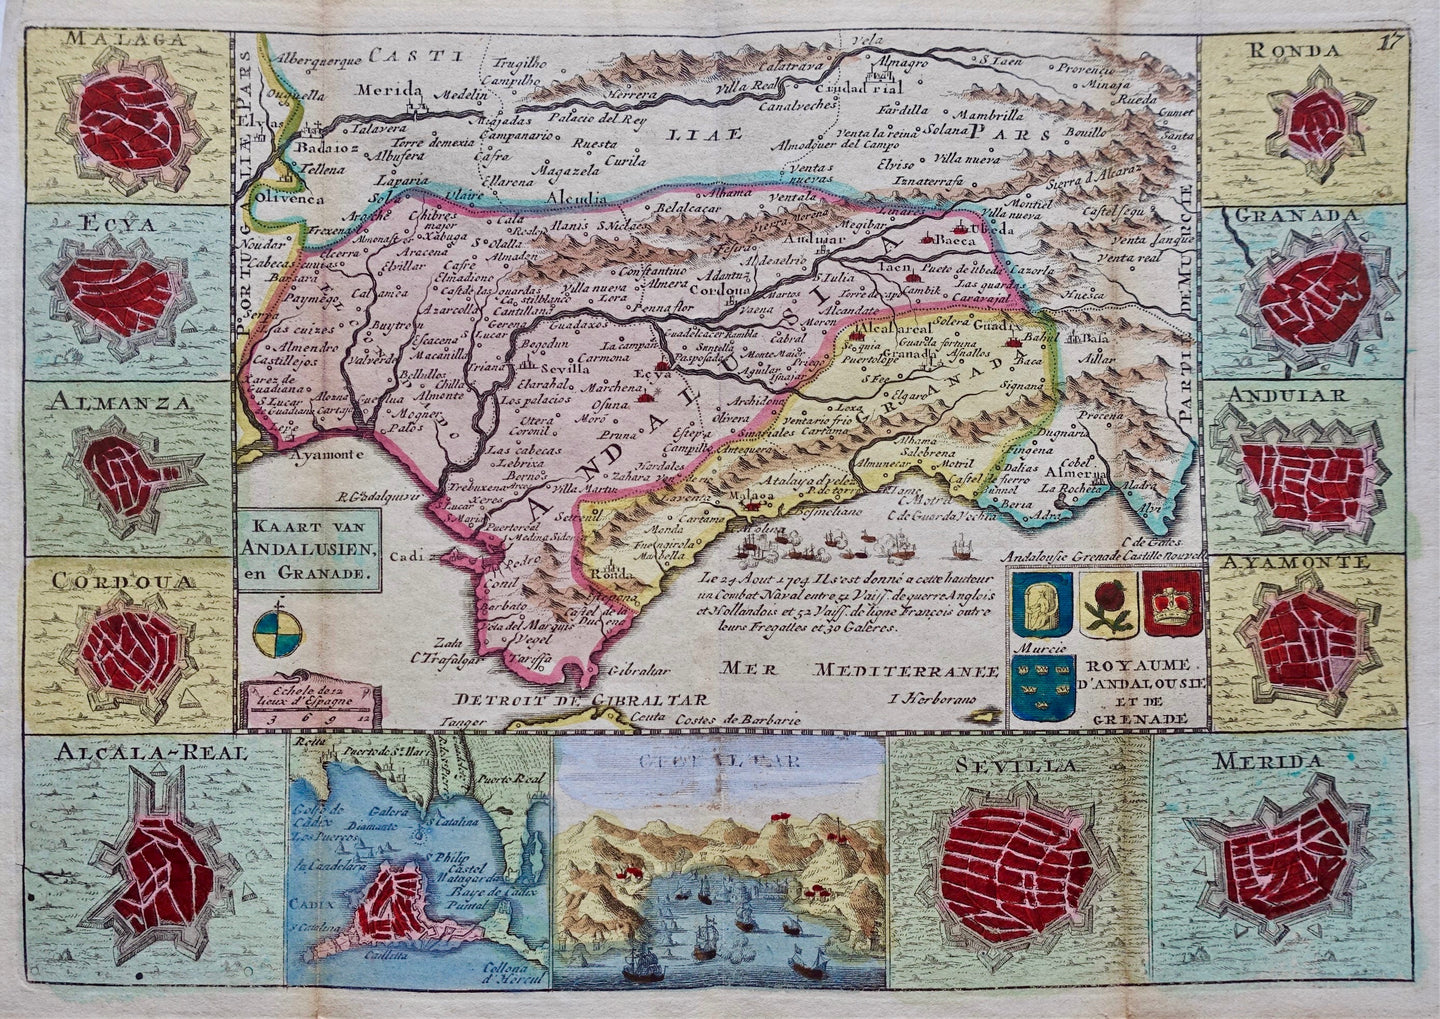 Spanje Andalusië Spain Andalusia - J de la Feuille - 1729